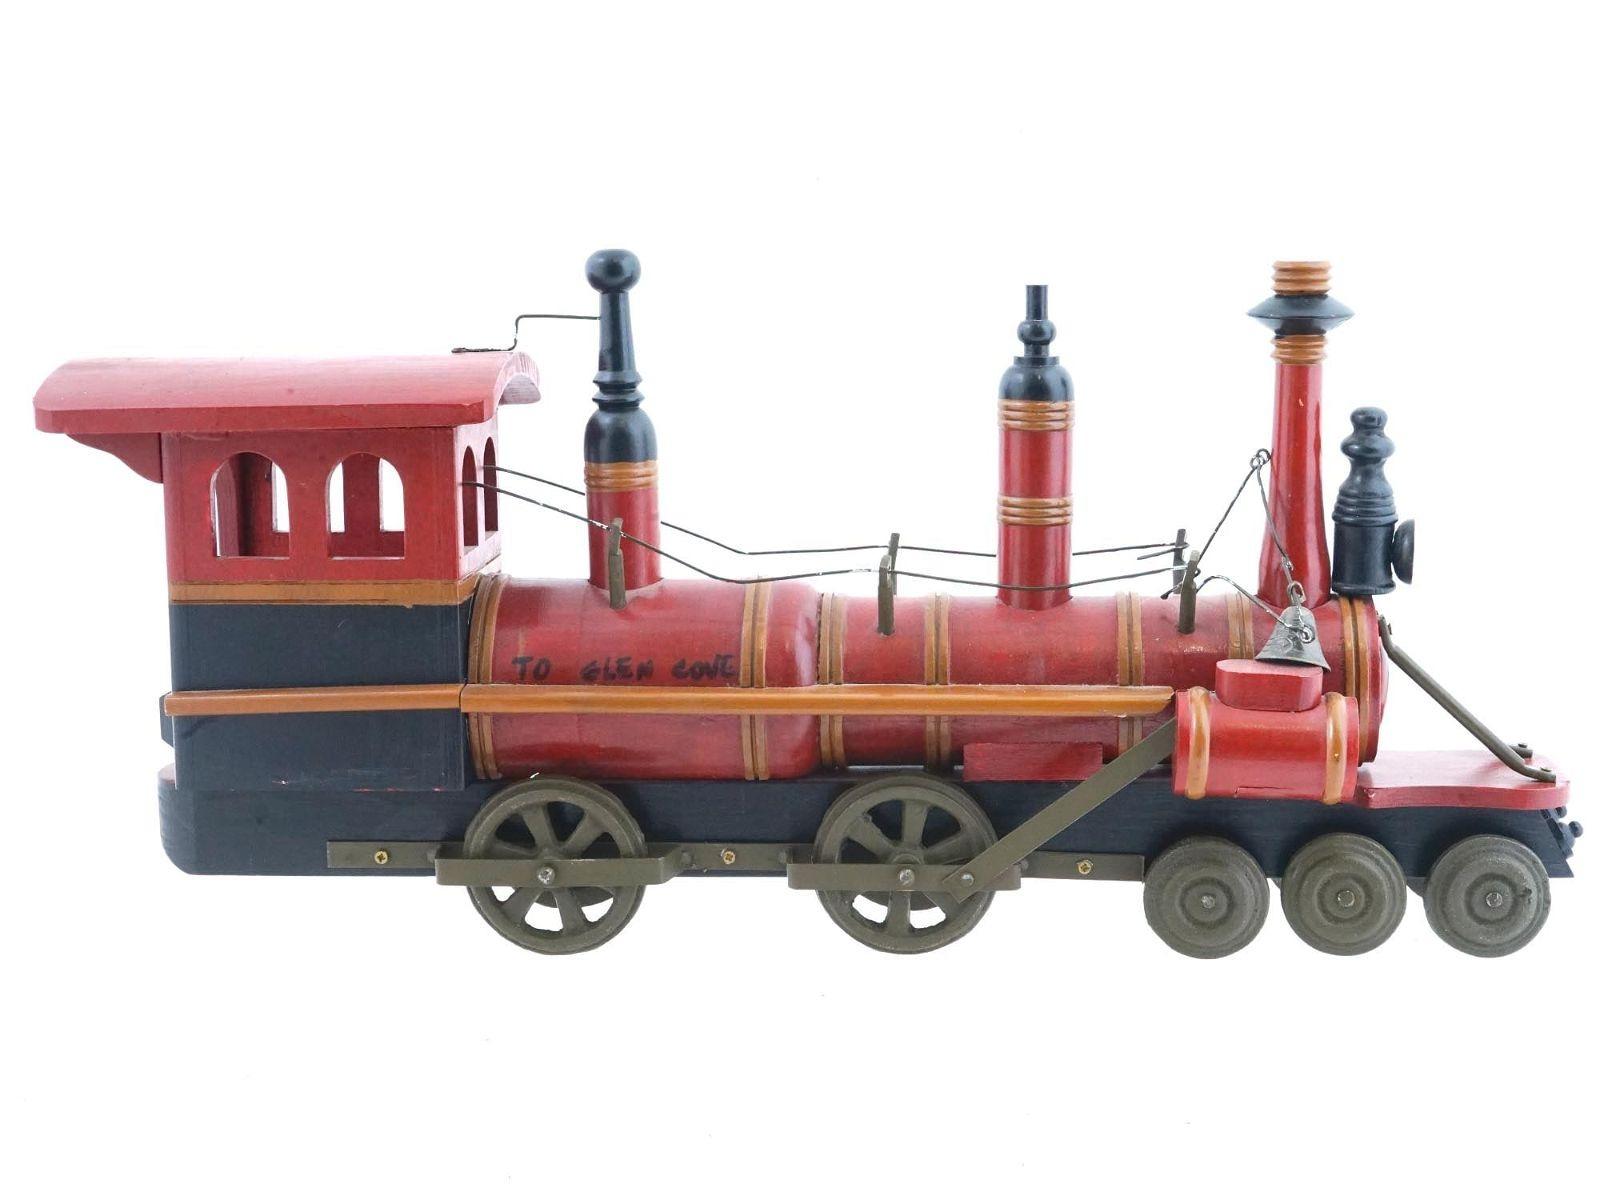 20th Century Vintage Steam Locomotive Toy For Sale